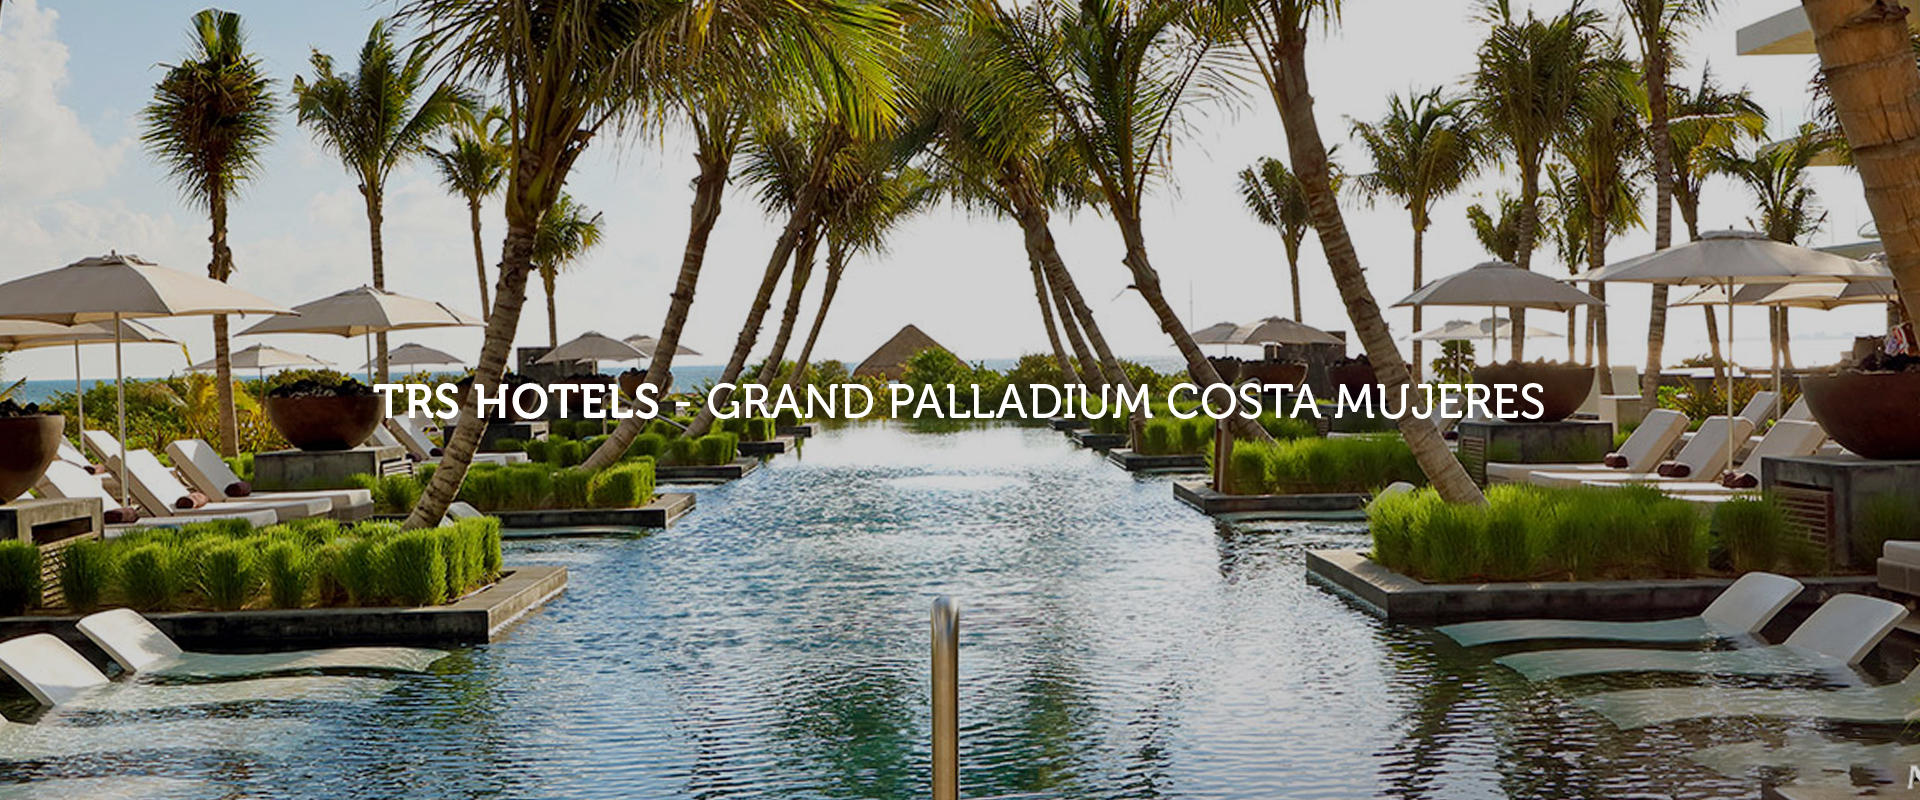 Grand Palladium Costa Mujeres – TRS Hotels